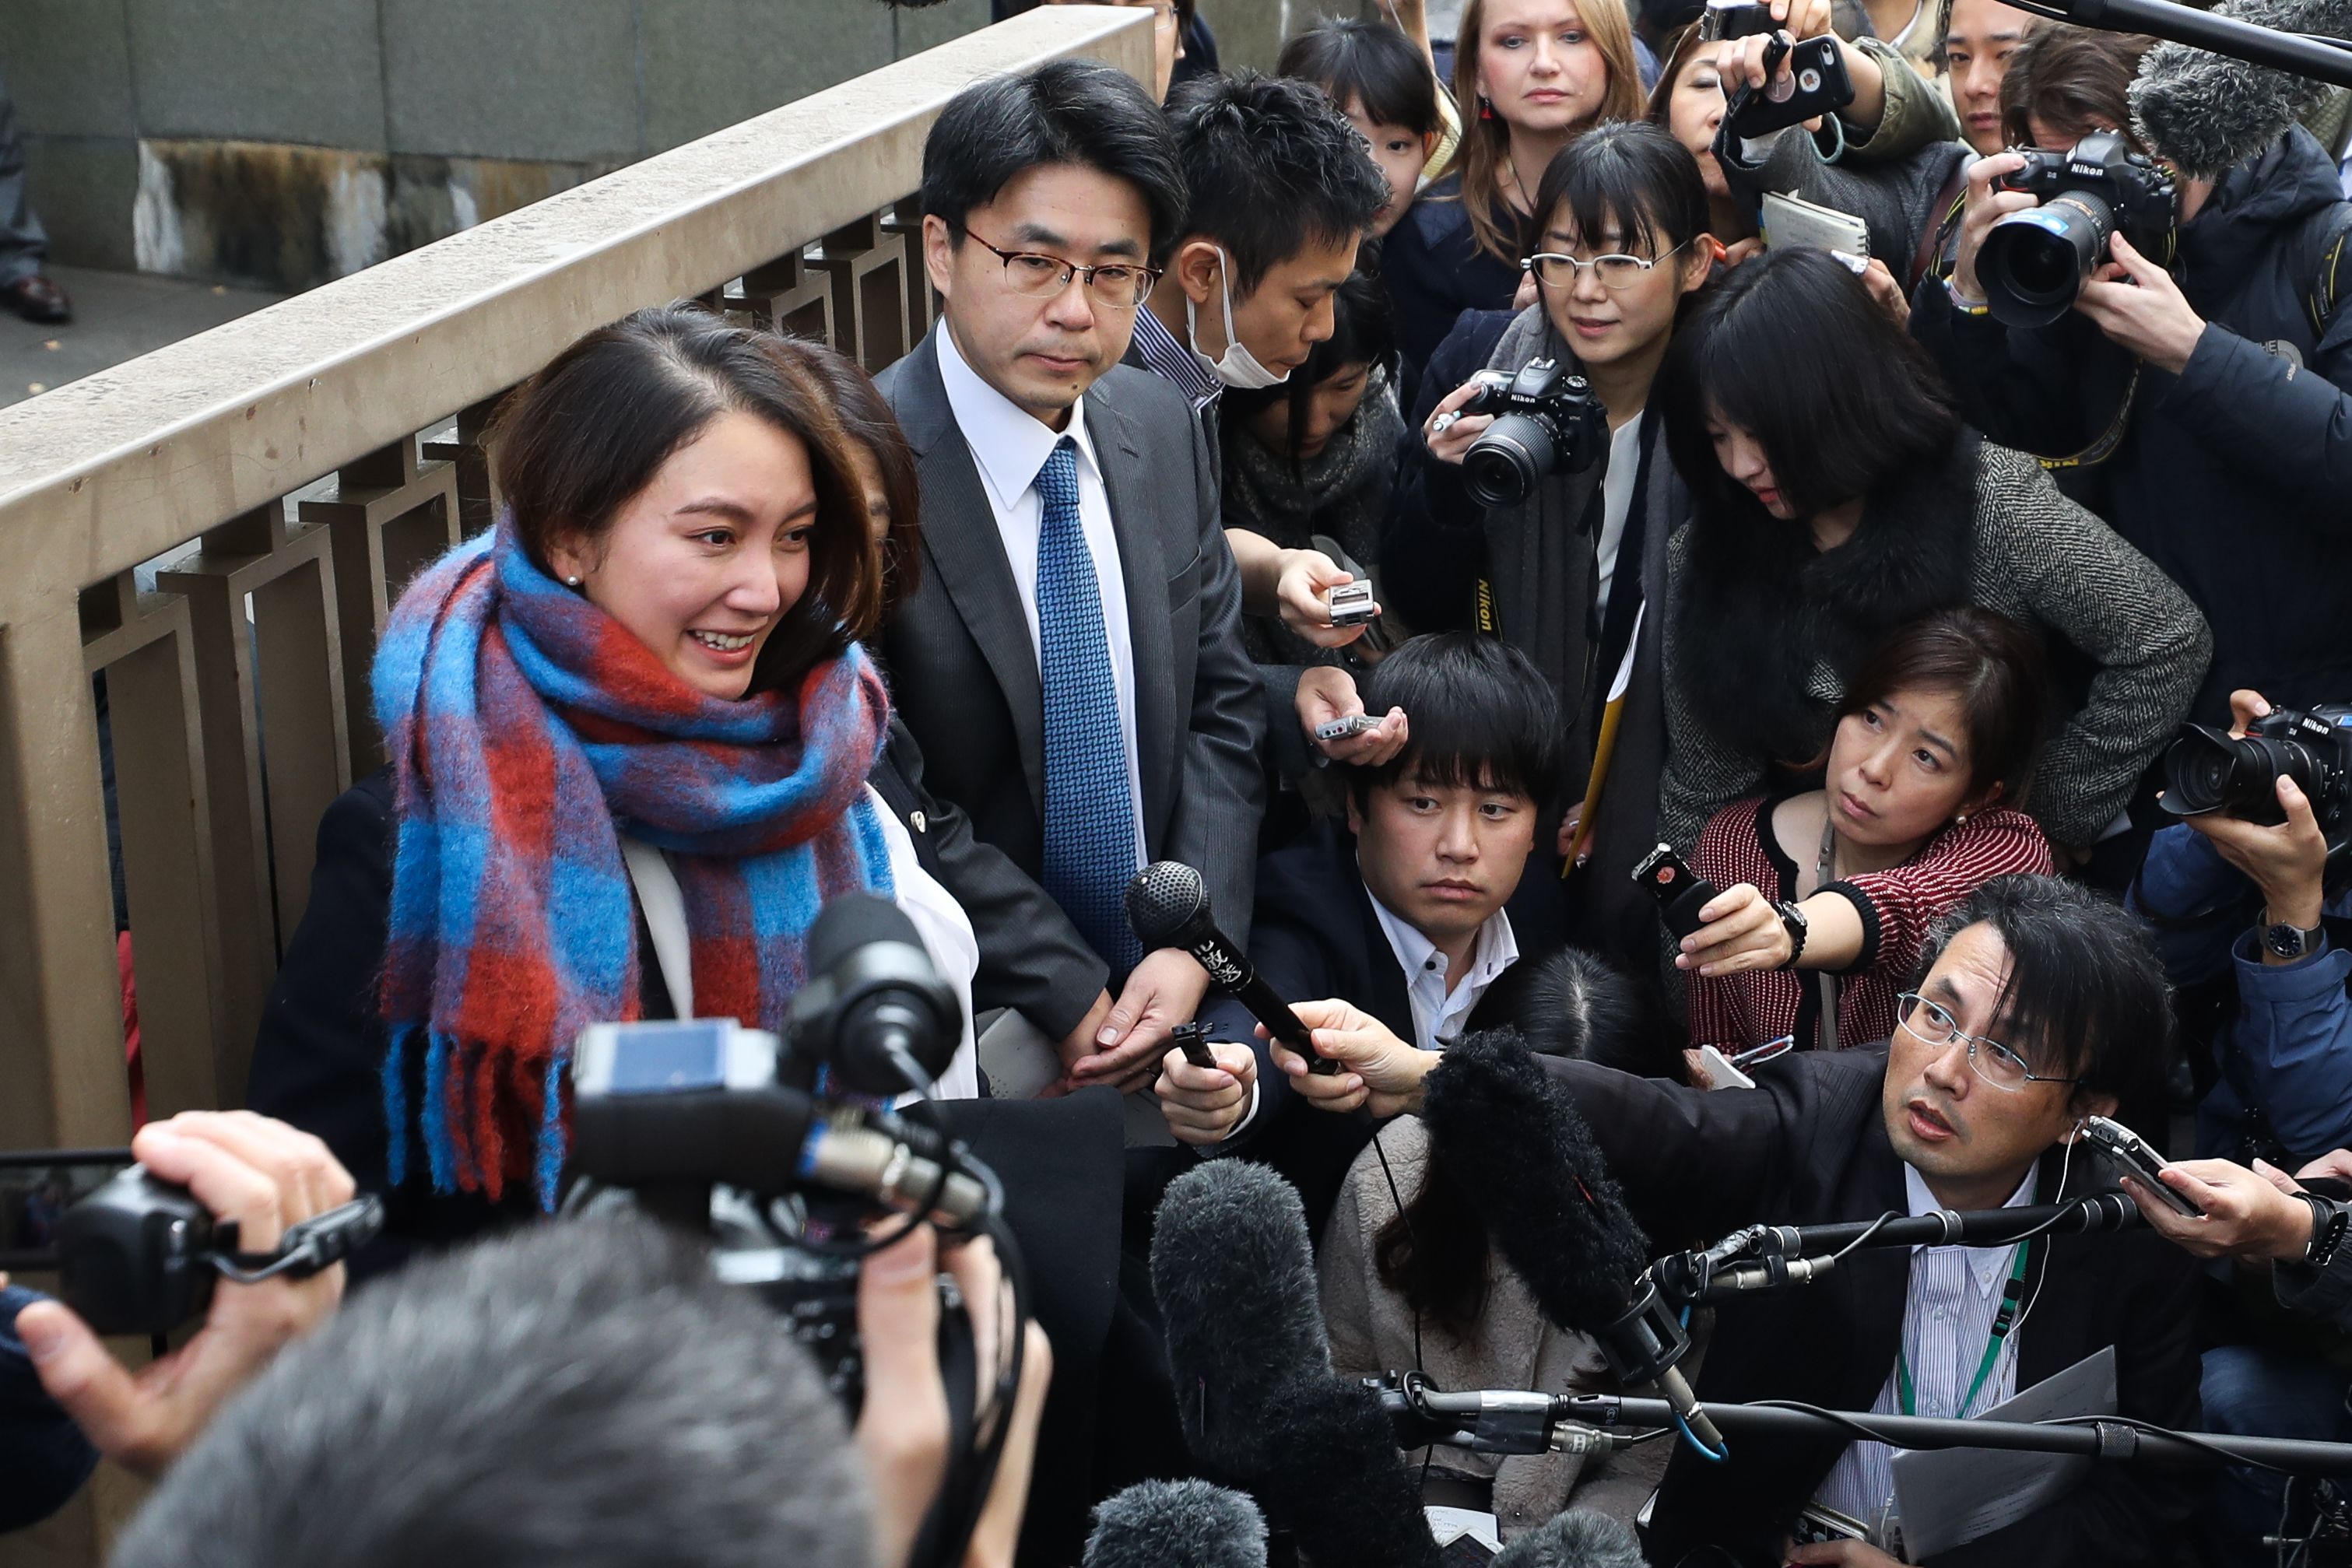 Kedinap Sex Rep Videos - Shiori Ito won civil case against her alleged rapist. But Japan's rape laws  need overhaul, campaigners say | CNN